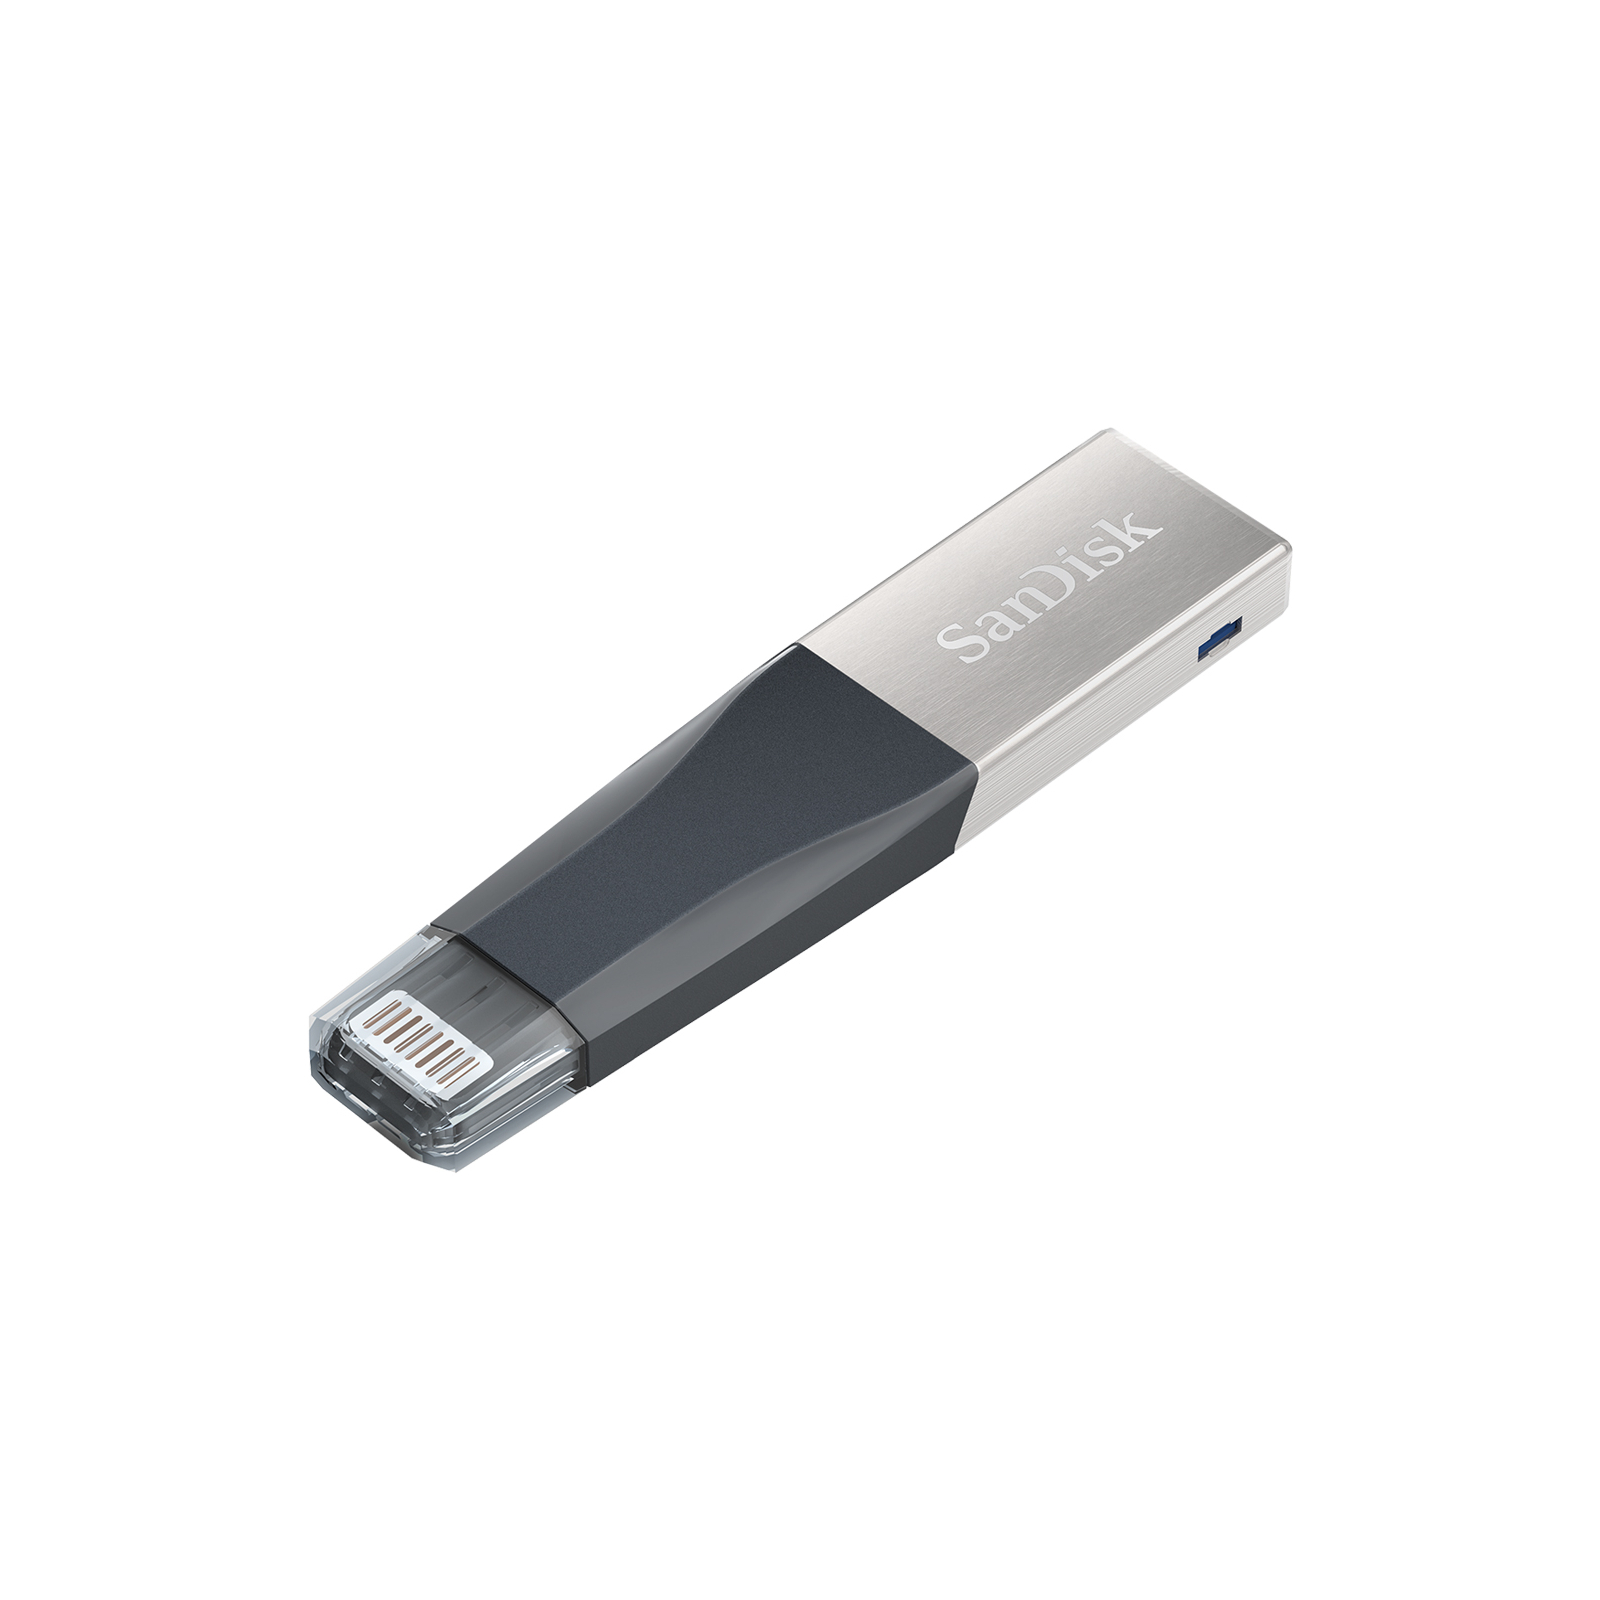 USB флеш накопитель SanDisk 32GB iXpand Mini USB 3.0/Lightning (SDIX40N-032G-GN6NN) изображение 4